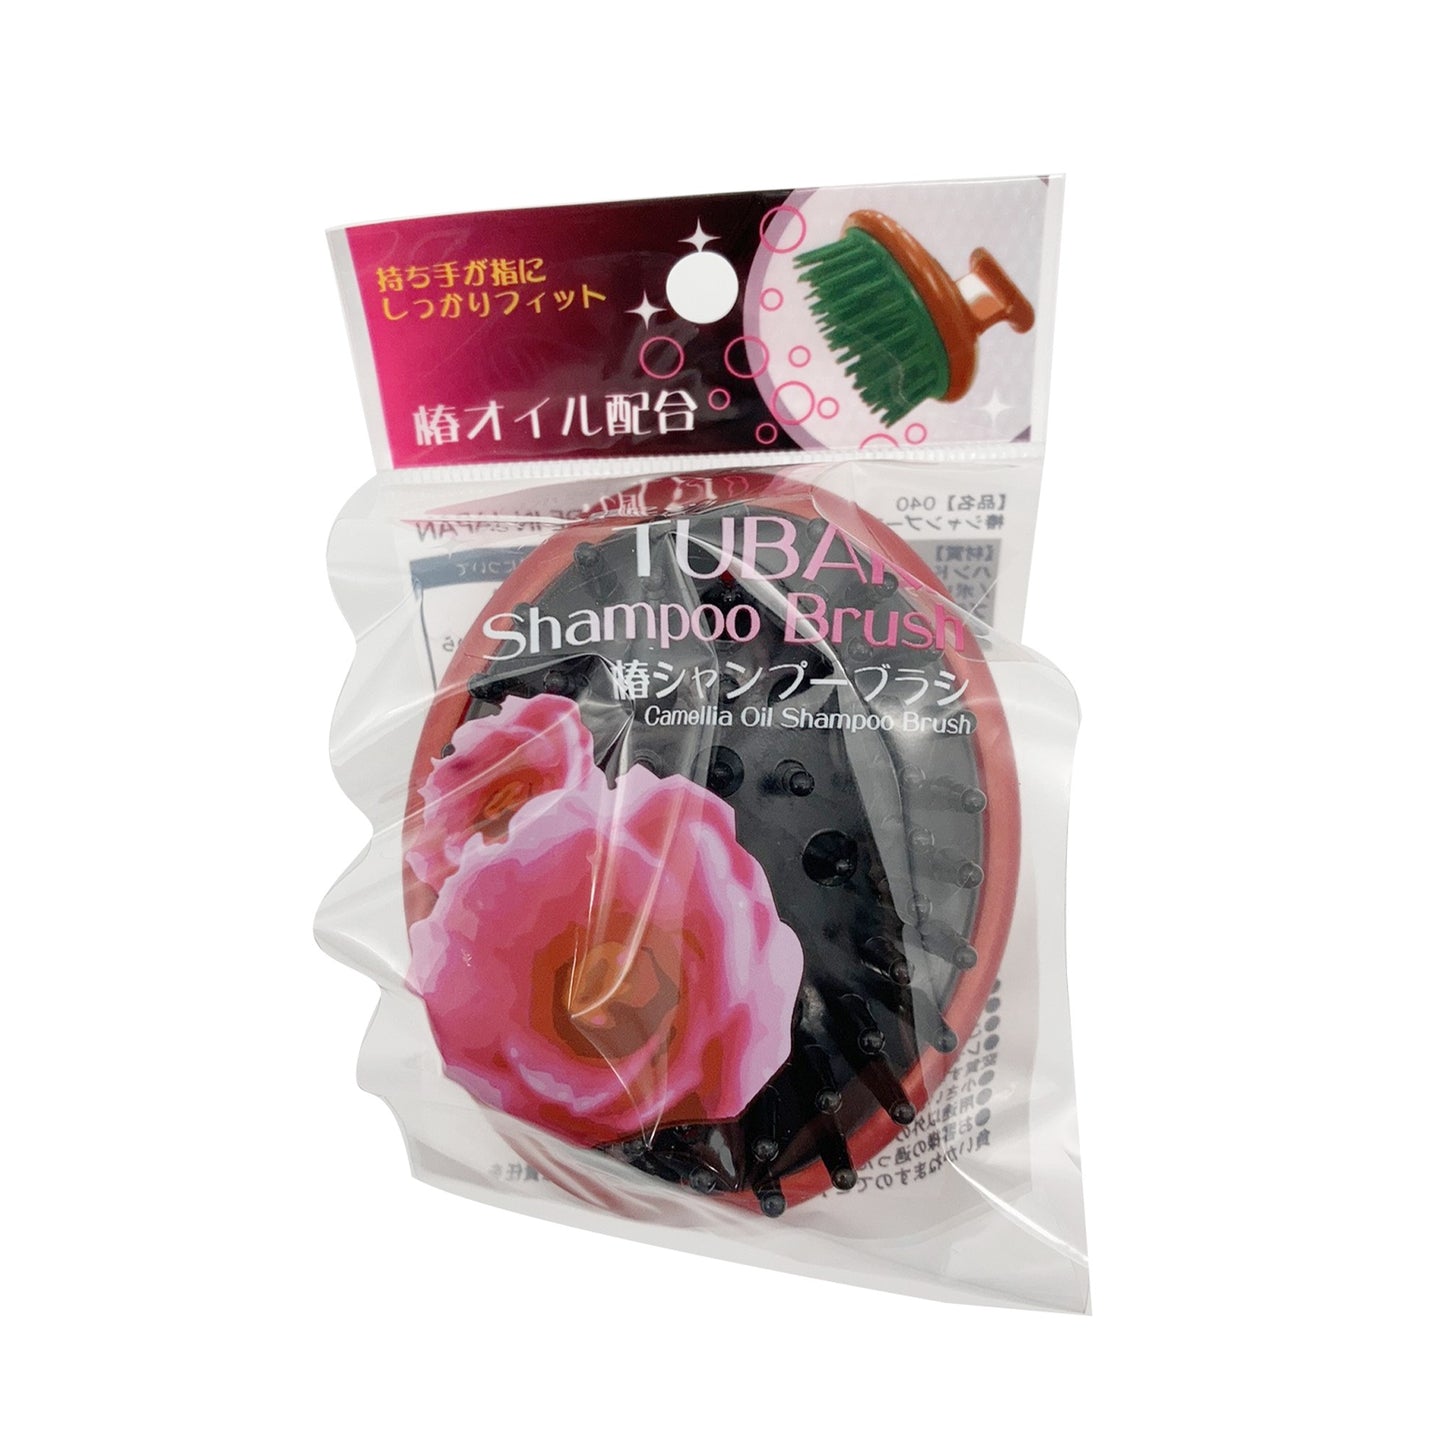 Shampoo Brush (TSUBAKI; Japanese camellia)